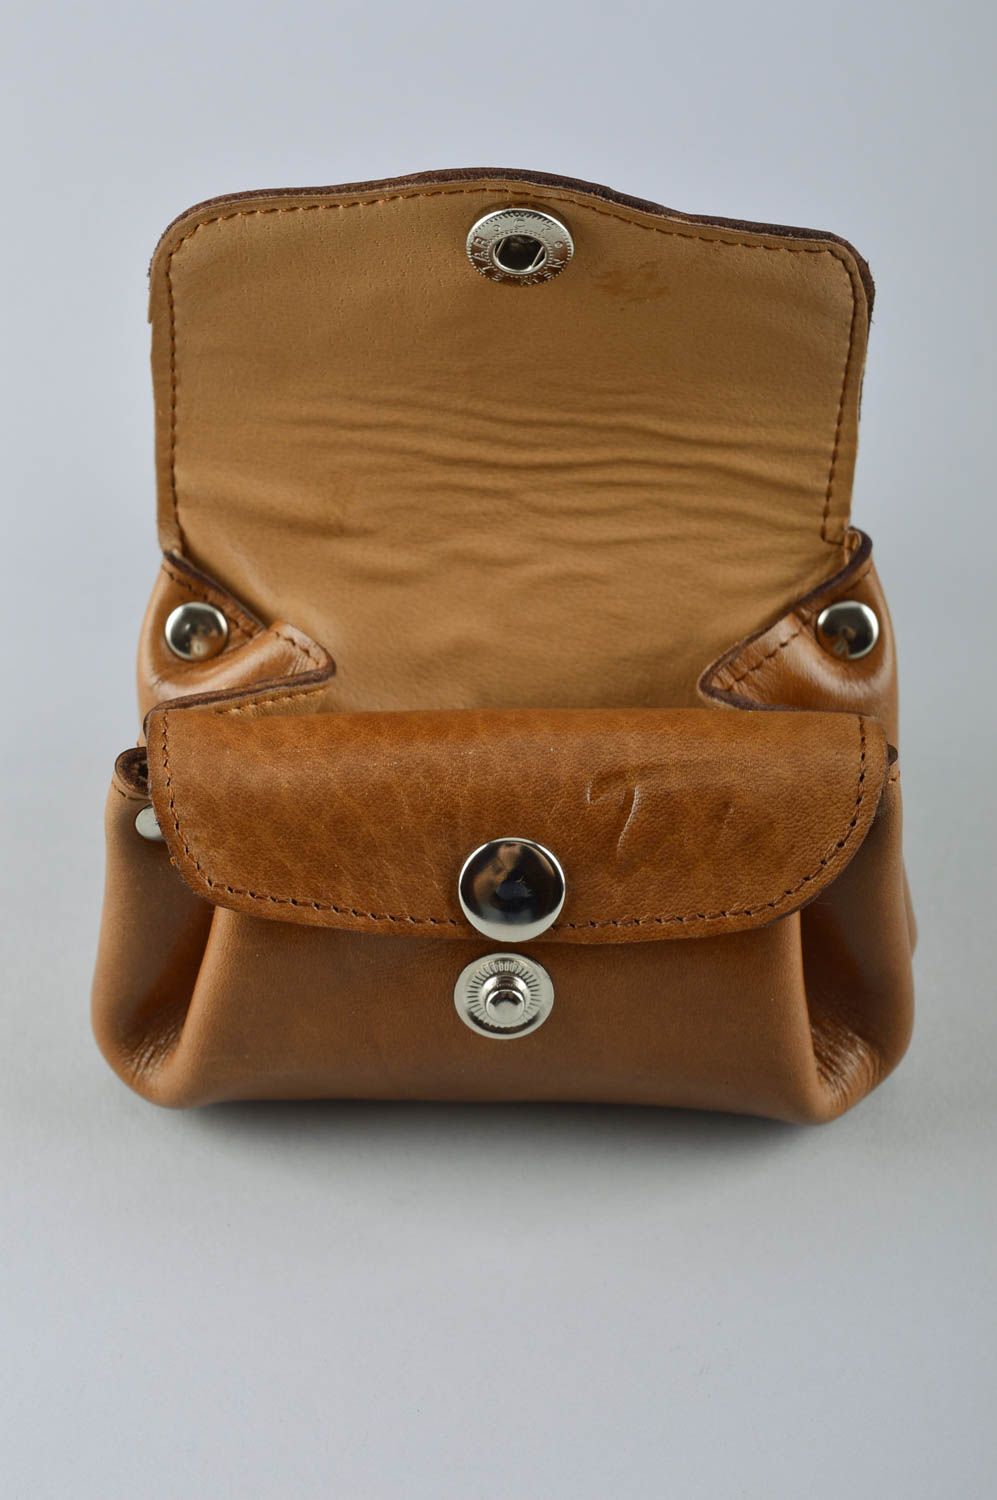 Handmade bag charms, Women's Fashion, Bags & Wallets, Wallets